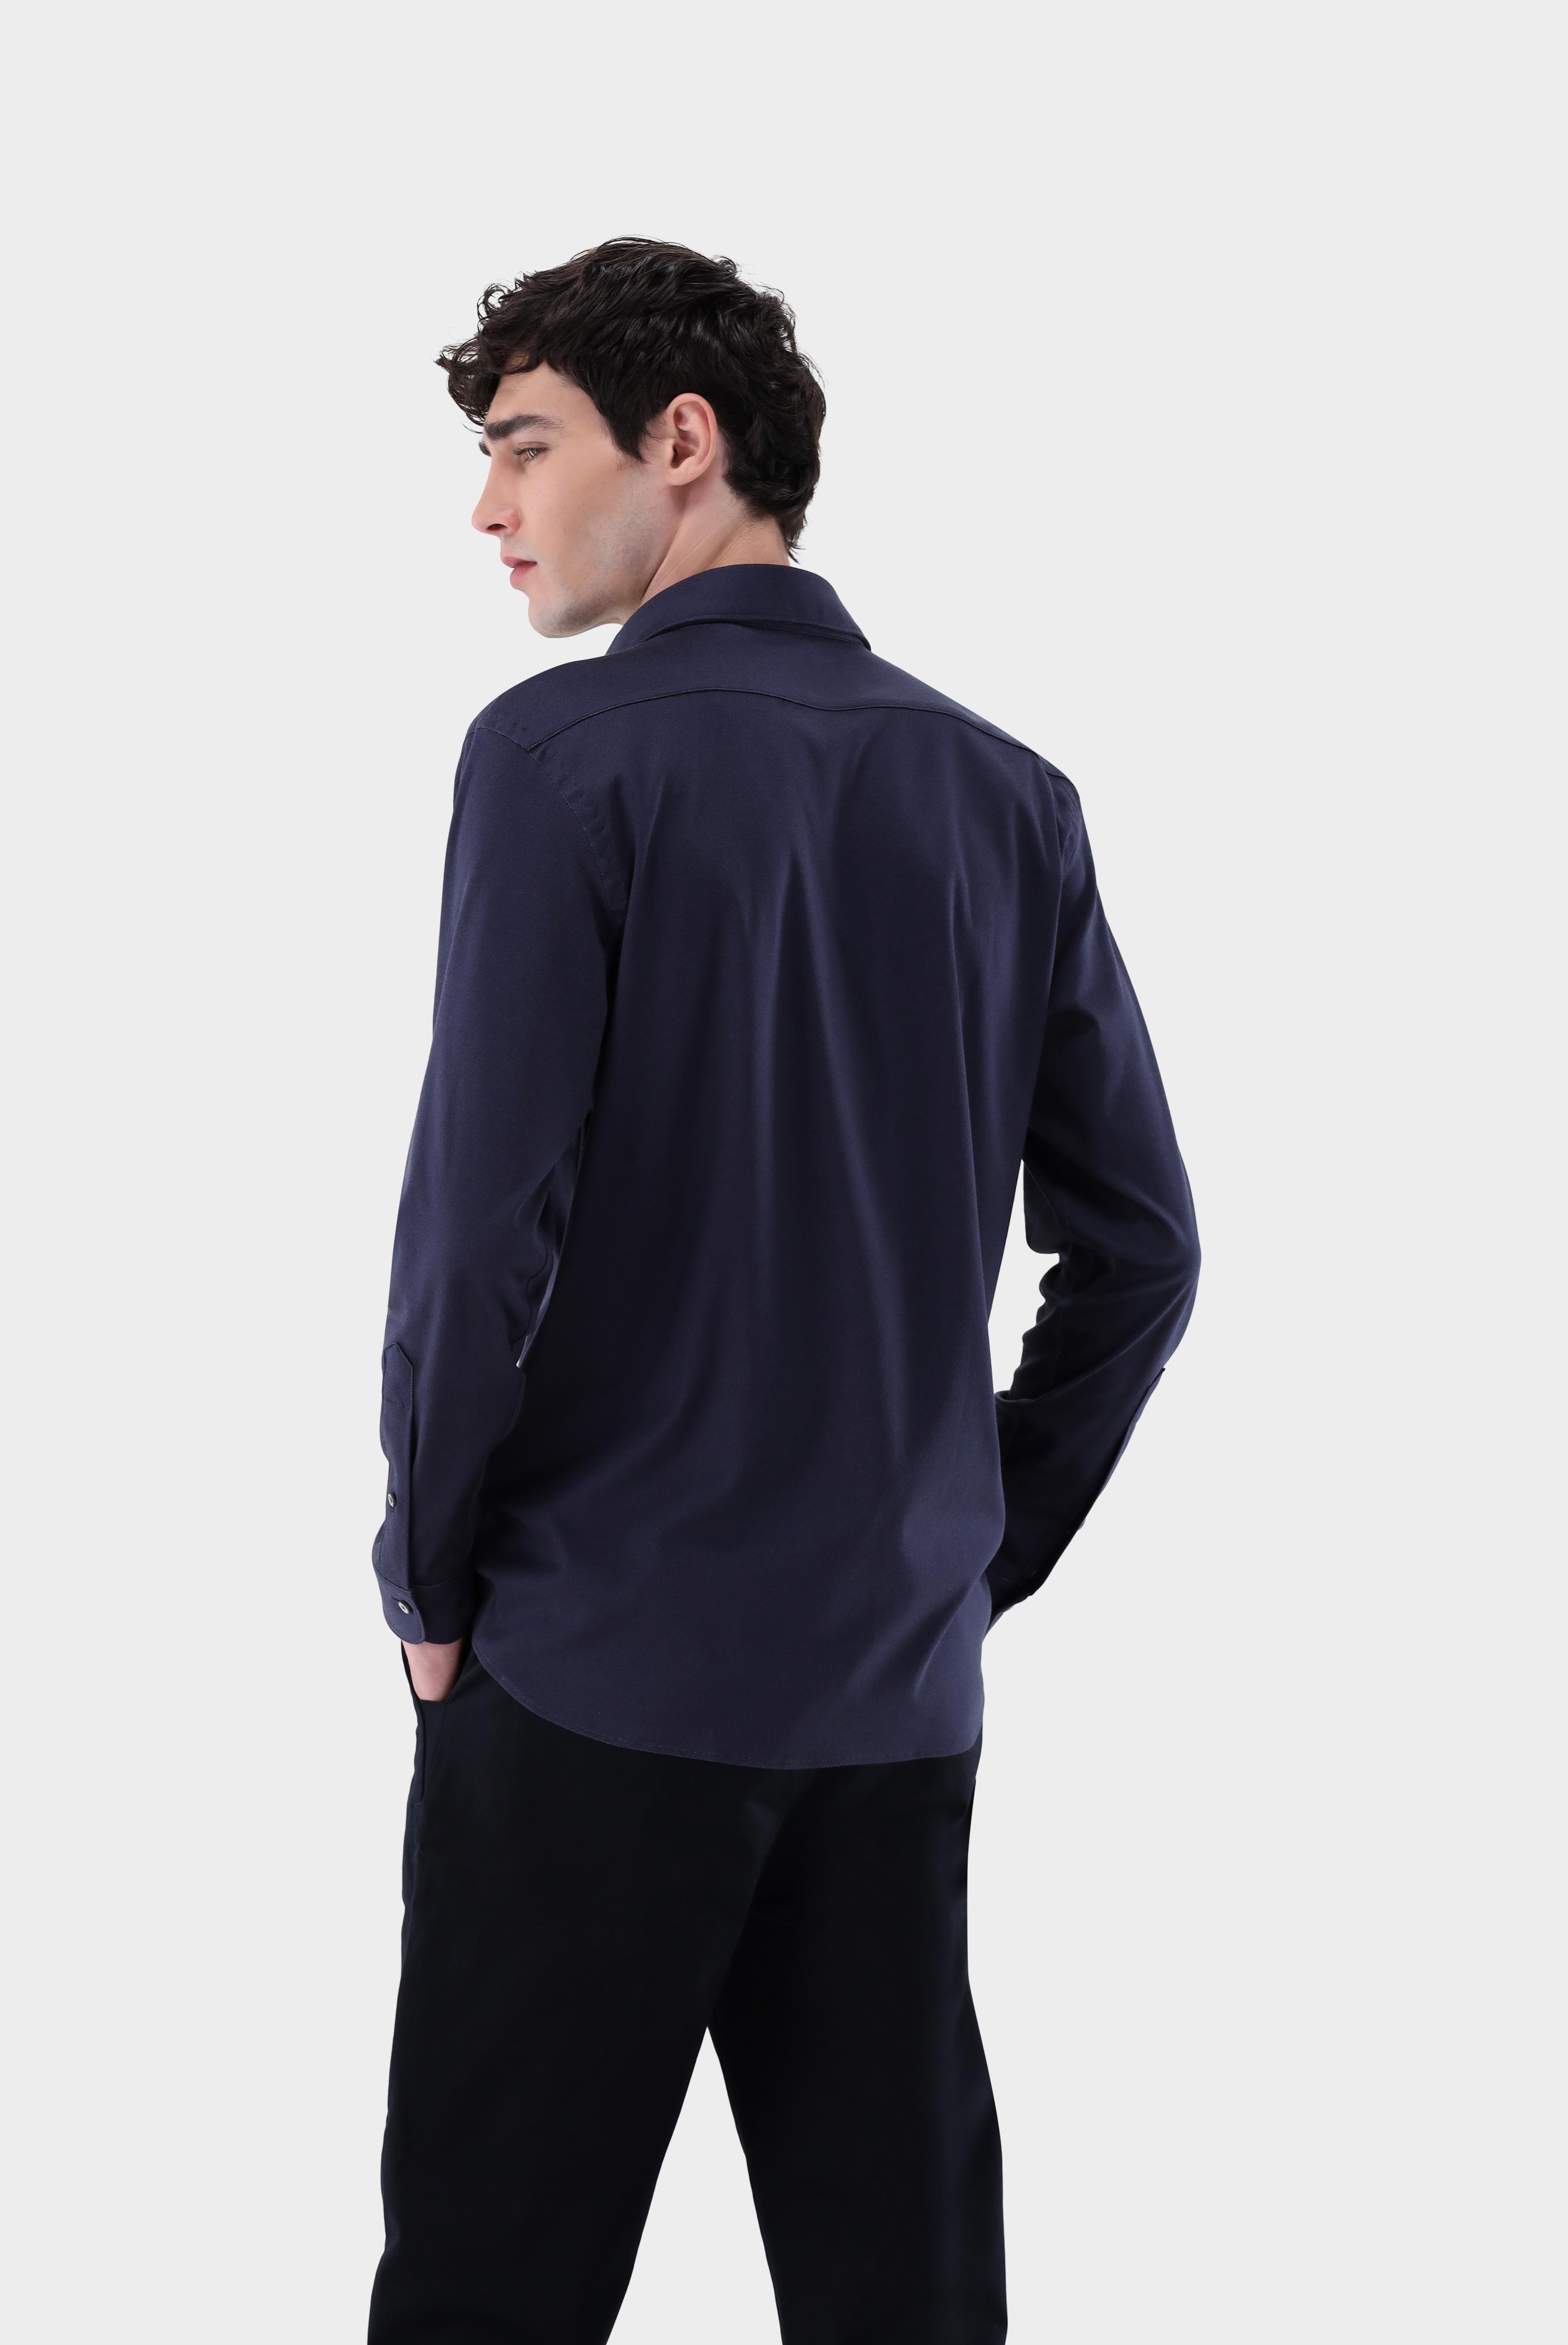 Casual Hemden+Jersey Hemd mit Twill Druck Tailor Fit+20.1683.UC.187749.690.S